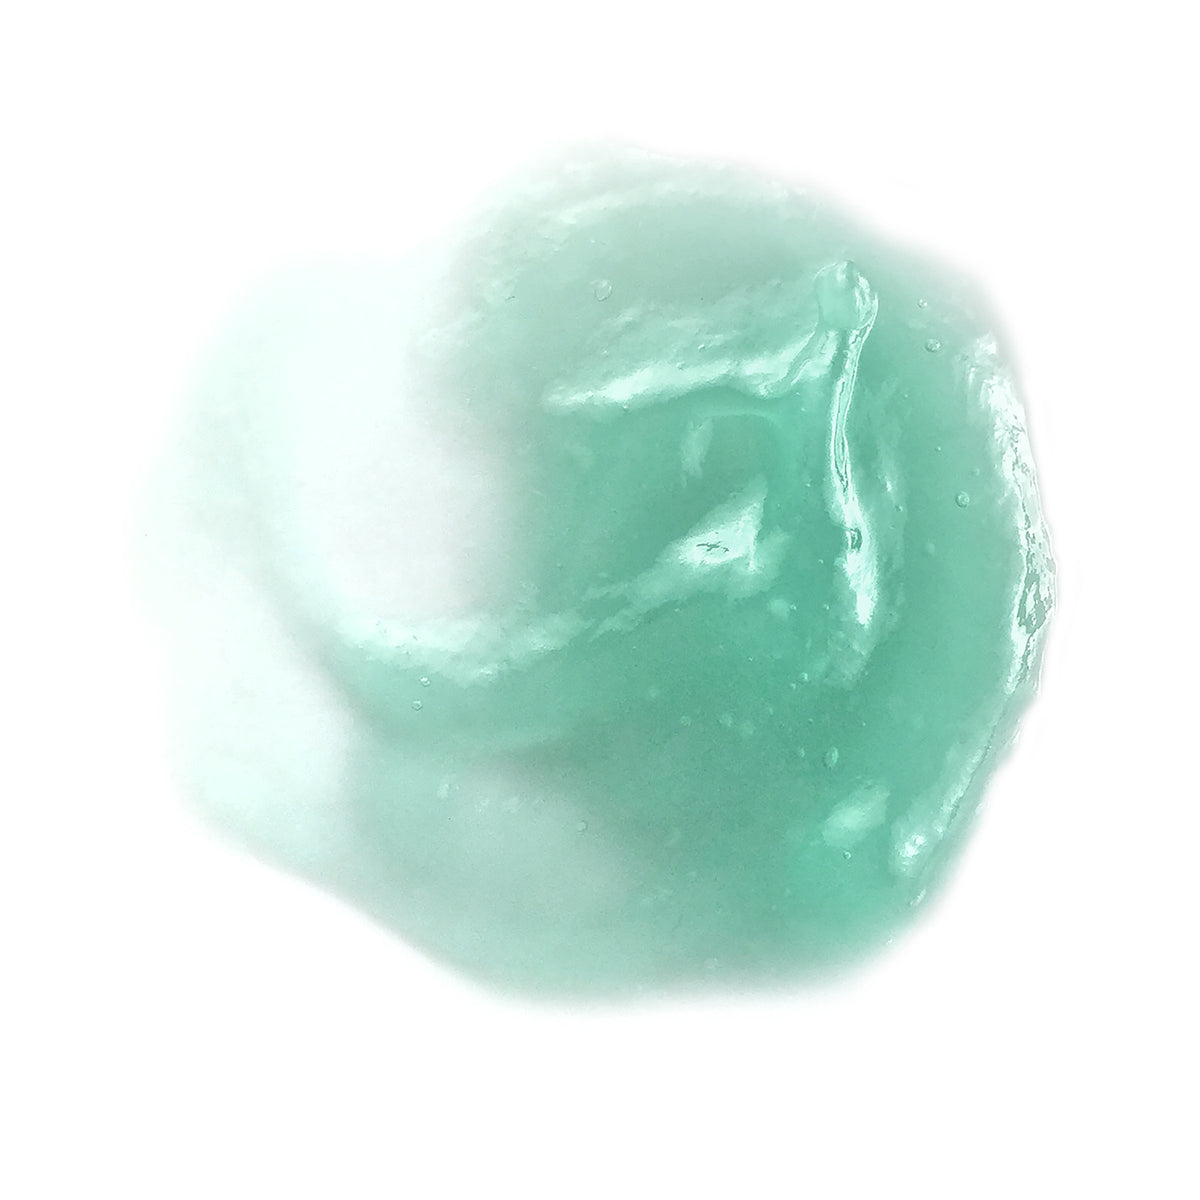 Cerulean Mask translucent blue gel texture.